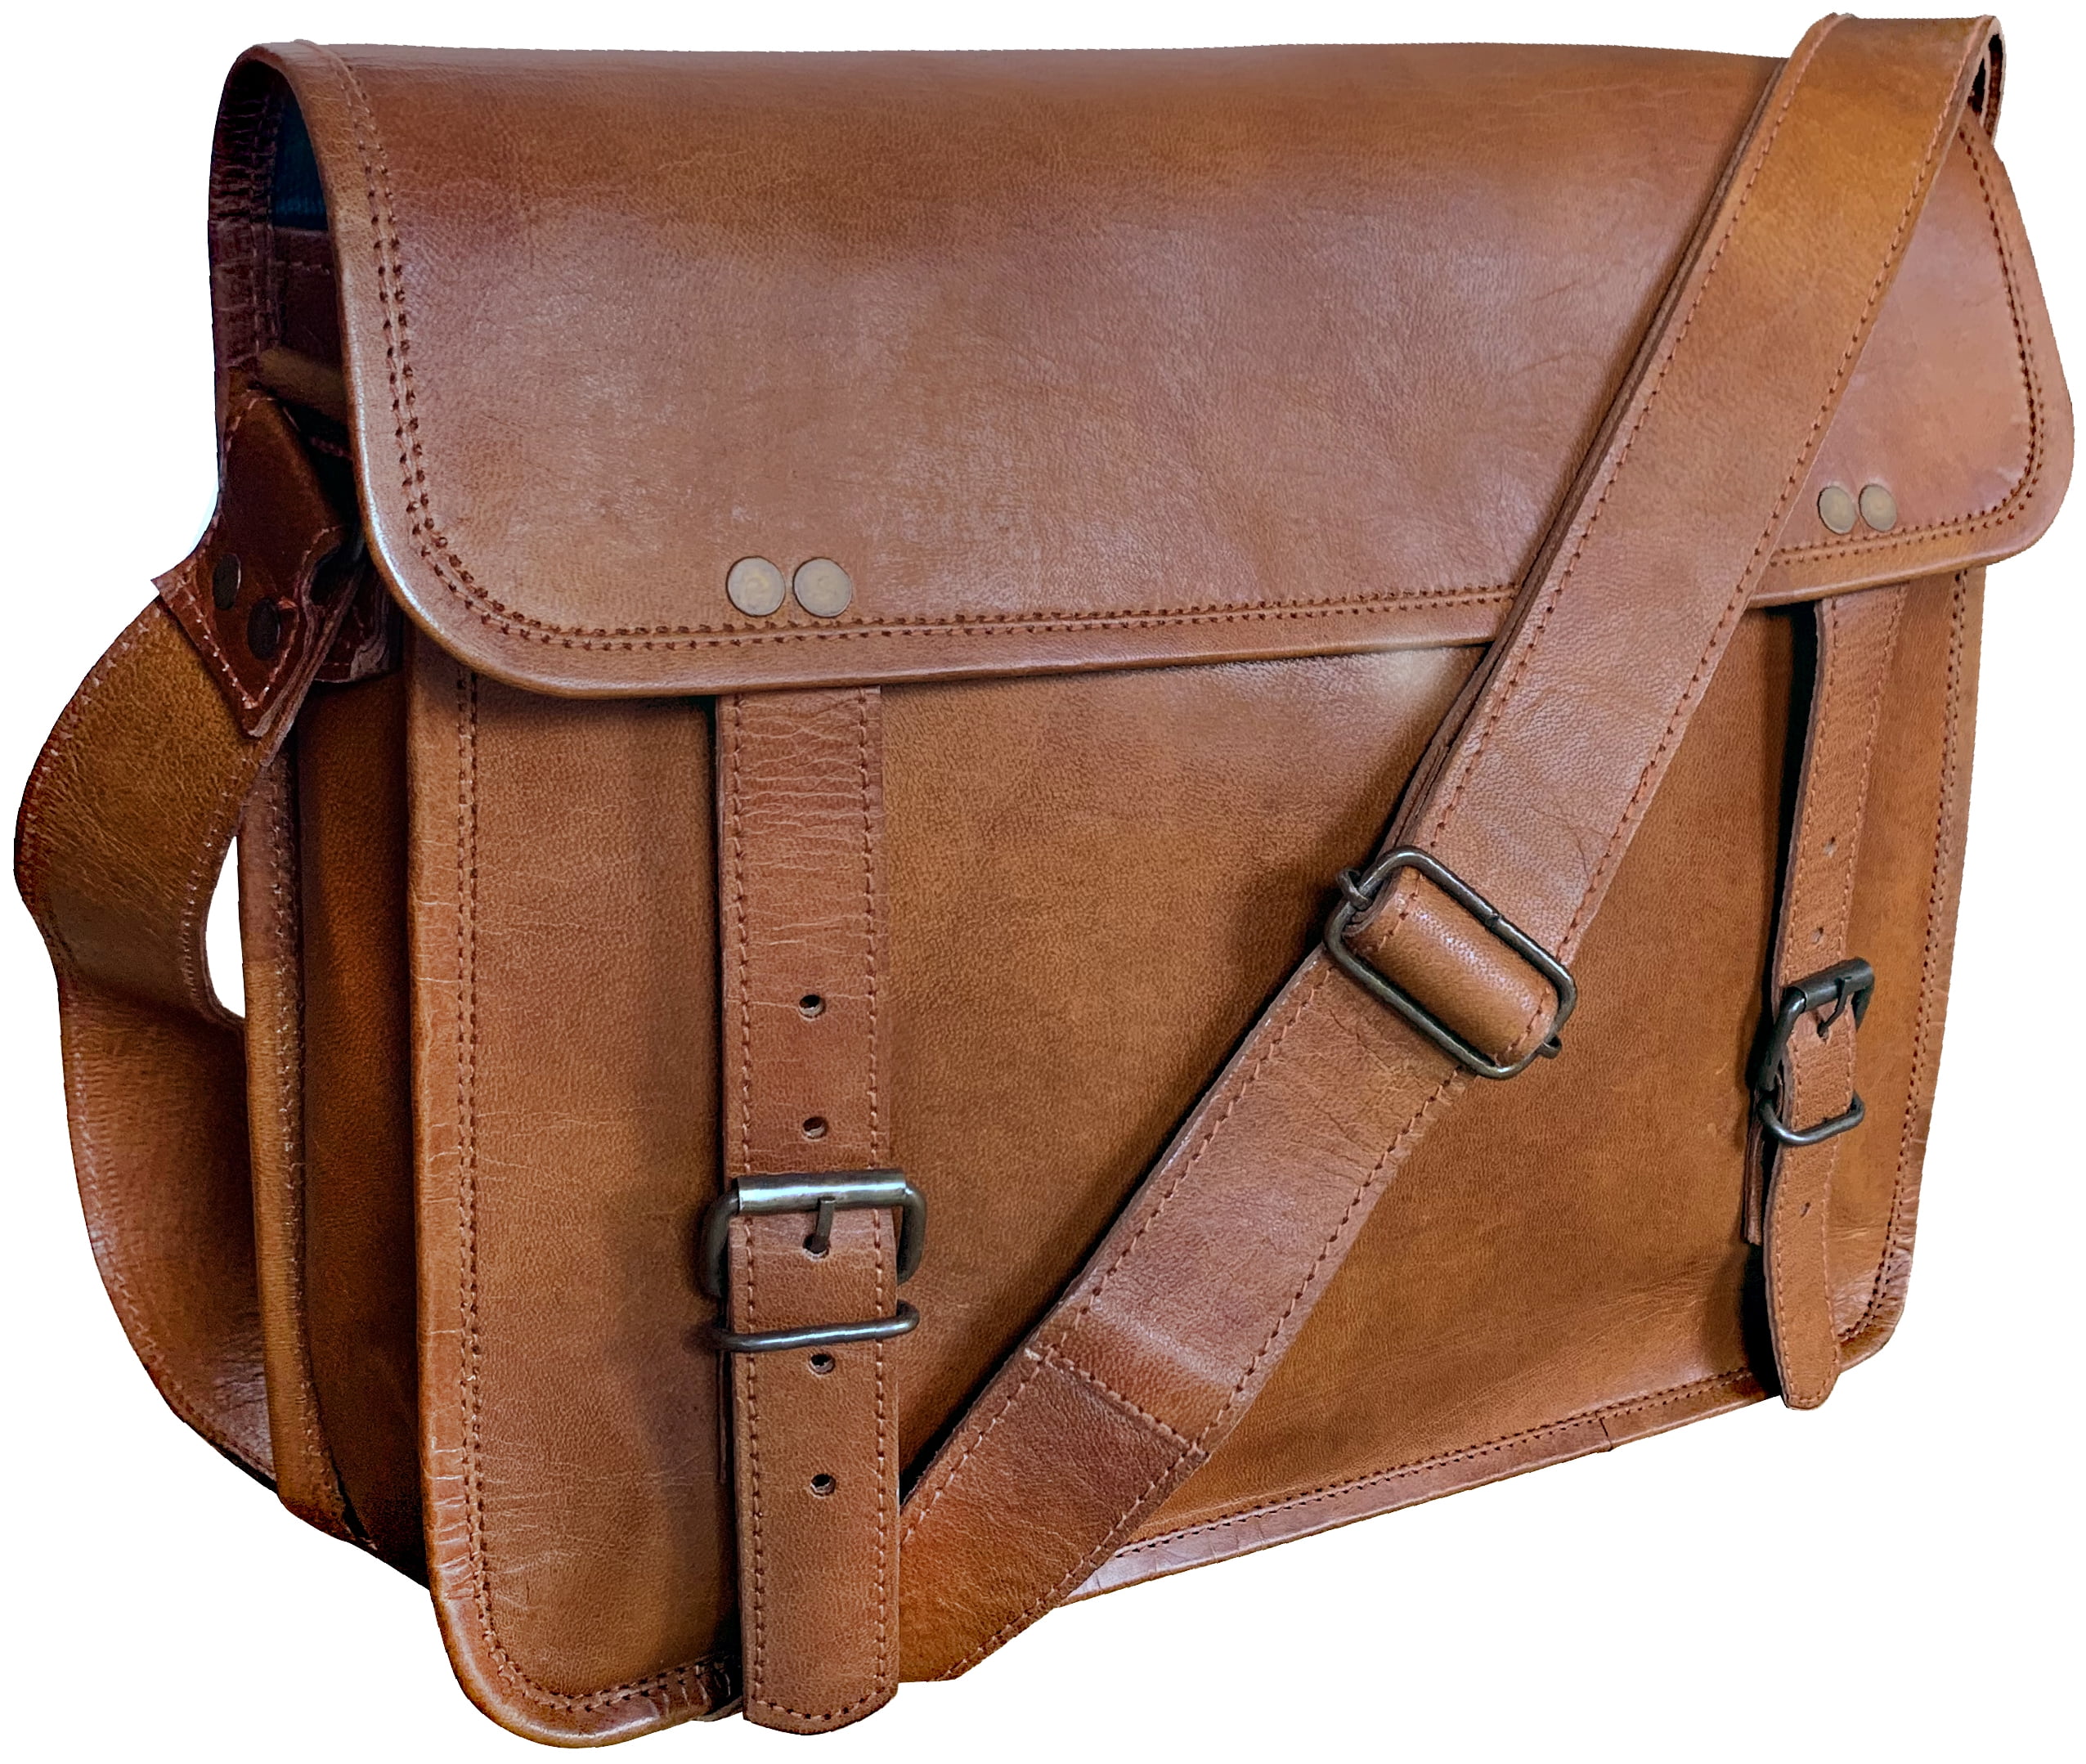 Rustic Vintage Leather Indiana Jones Satchel Purse All Sizes Free Surprise Gift Handmade Genuine Leather Women Satchel Purse Handbag 